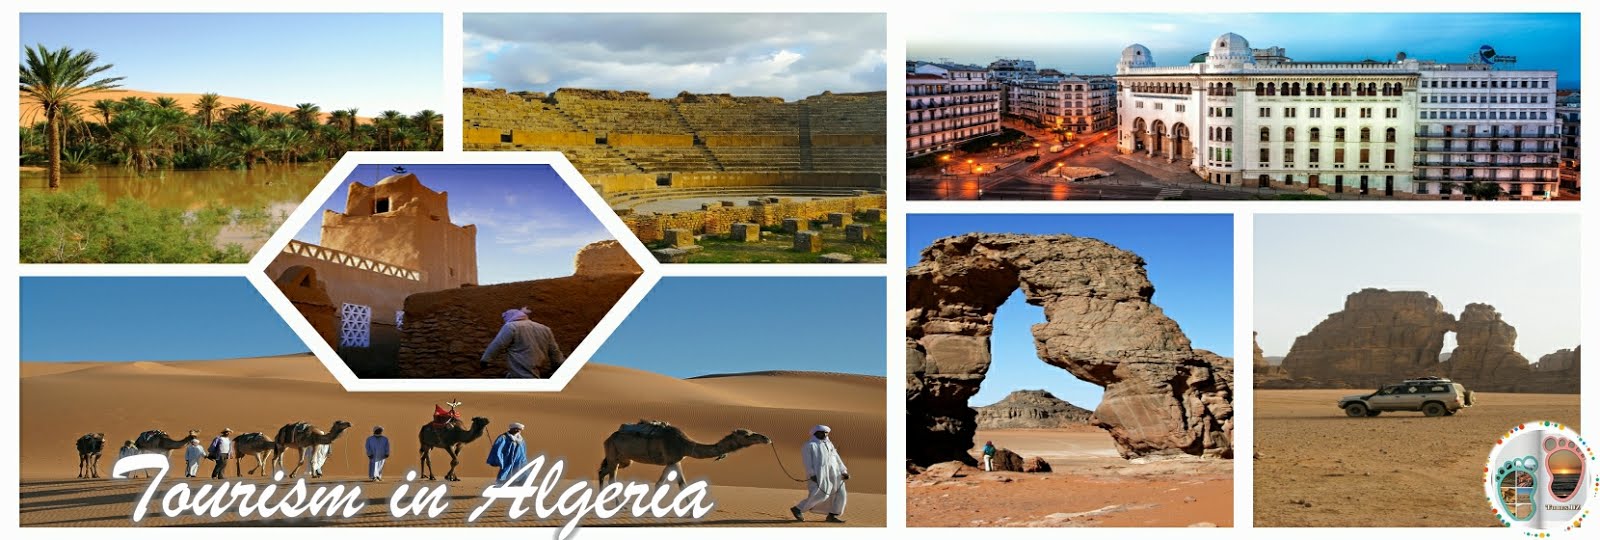 Tourism; in Algeria and around the world